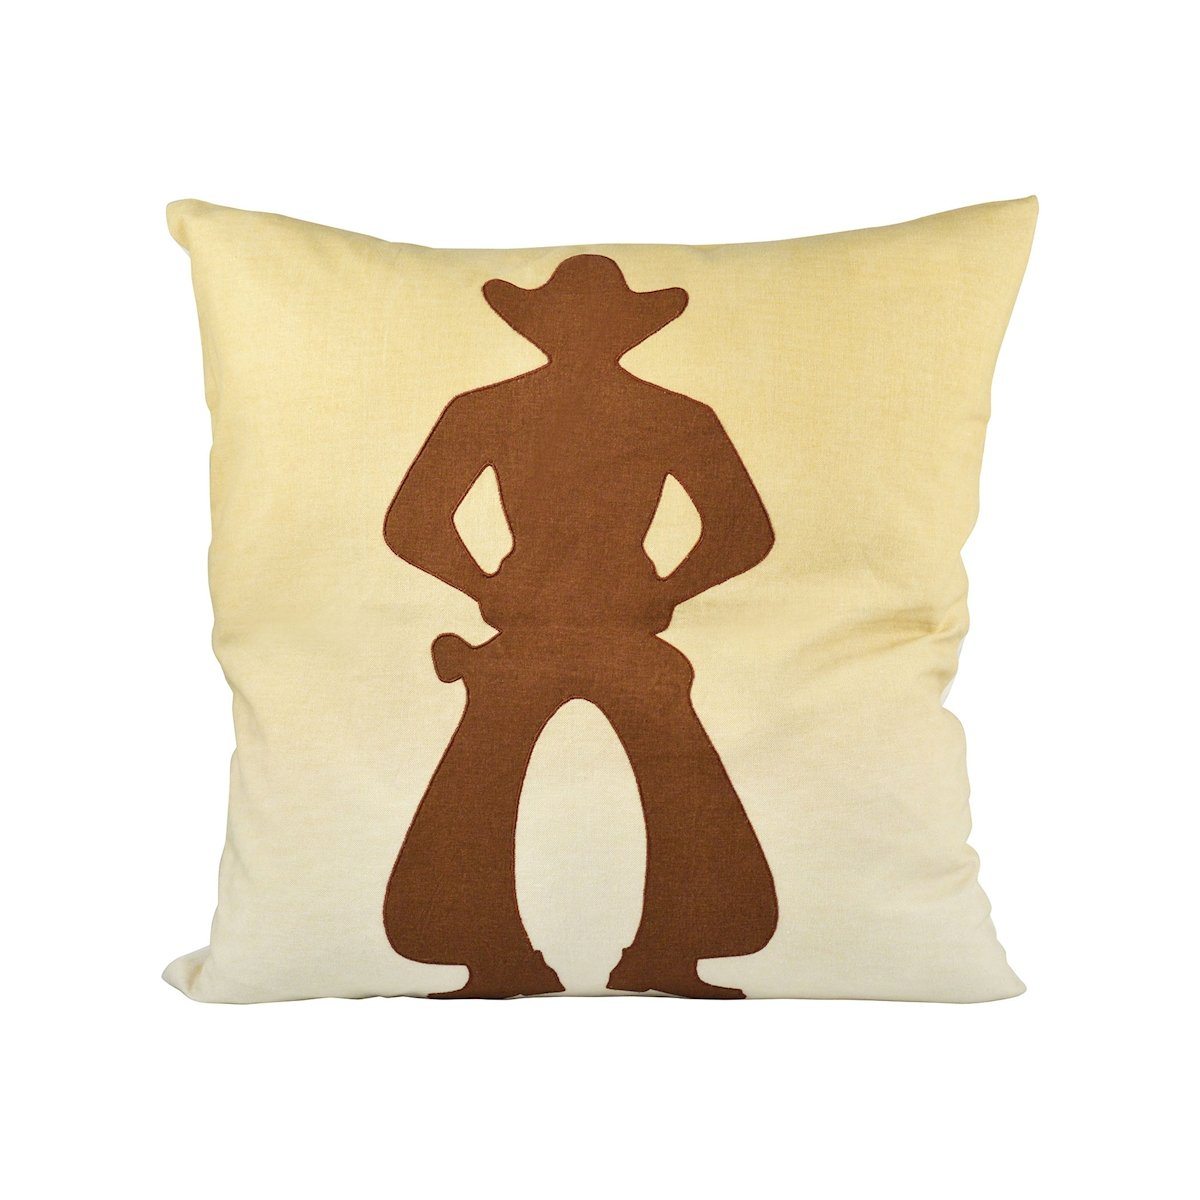 Cowboy 20x20 Pillow Accessories Pomeroy 